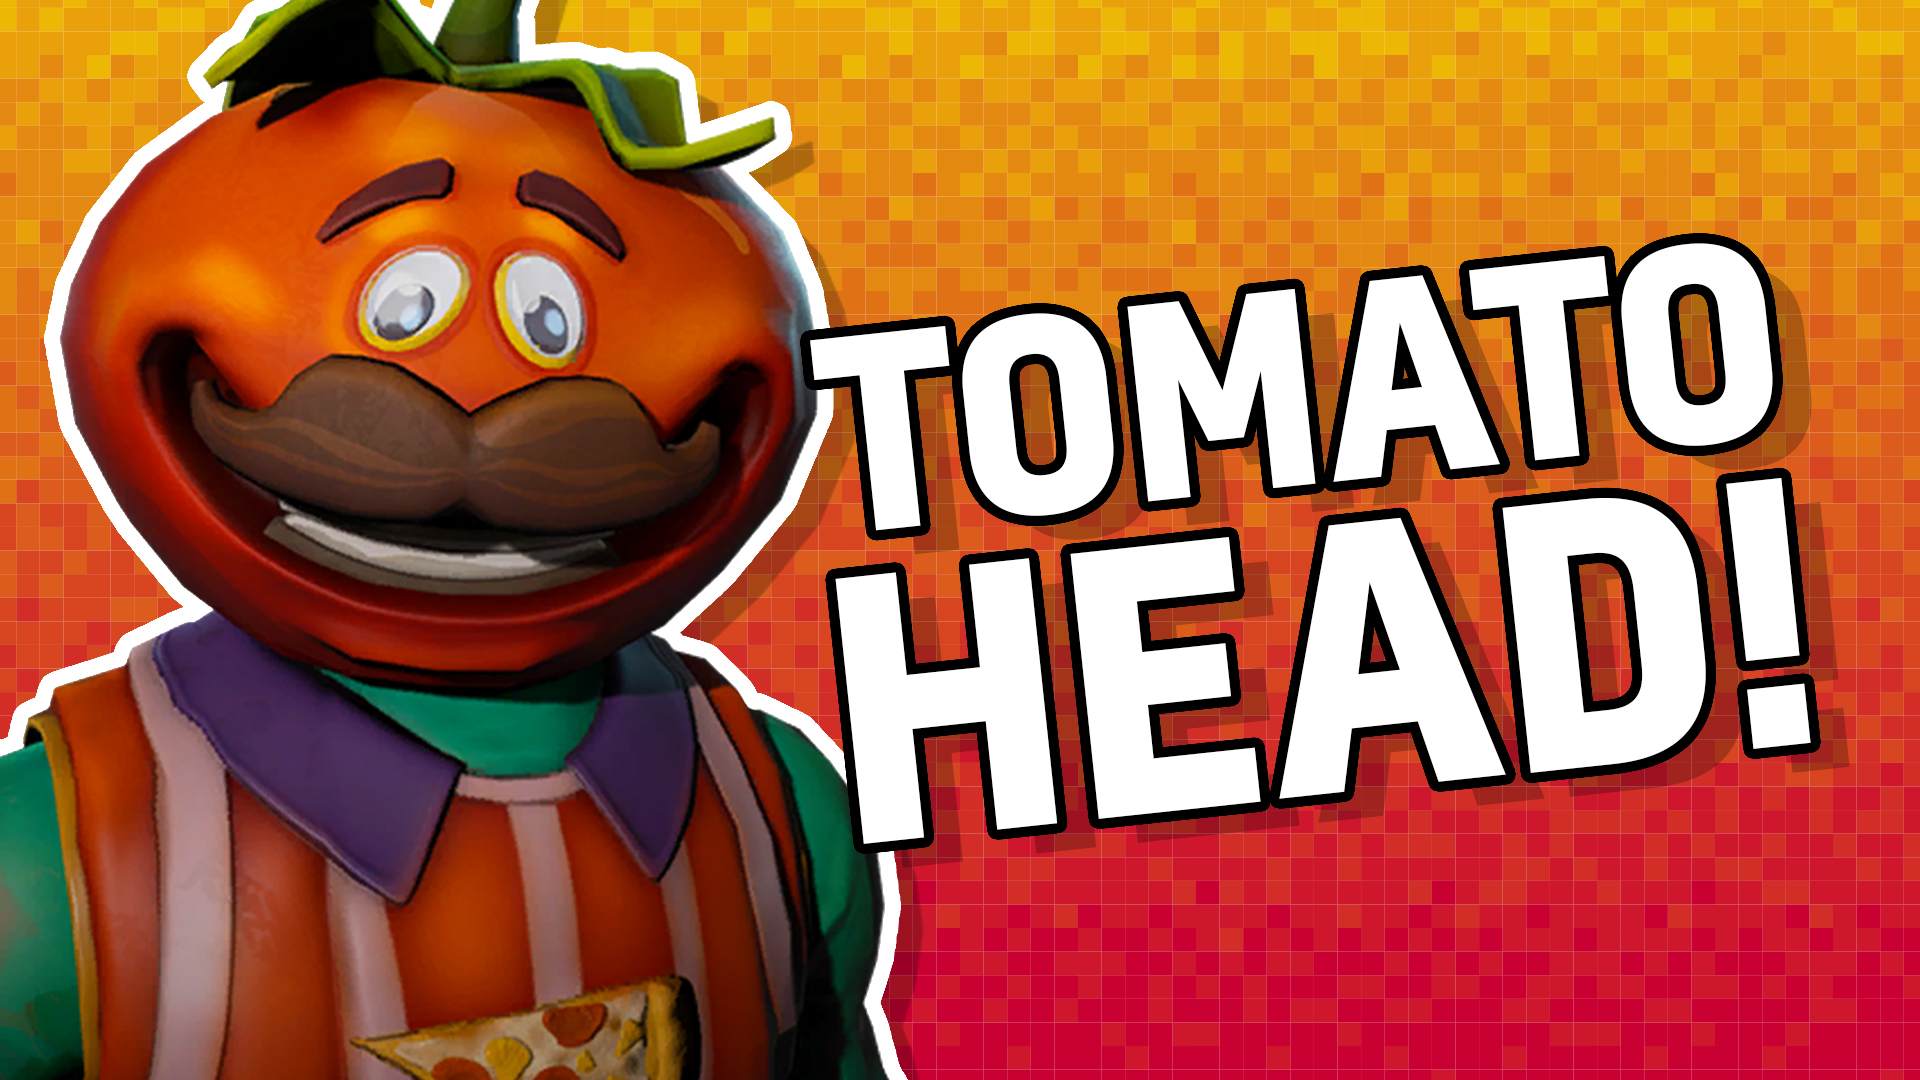 Tomato Head from Fortnite